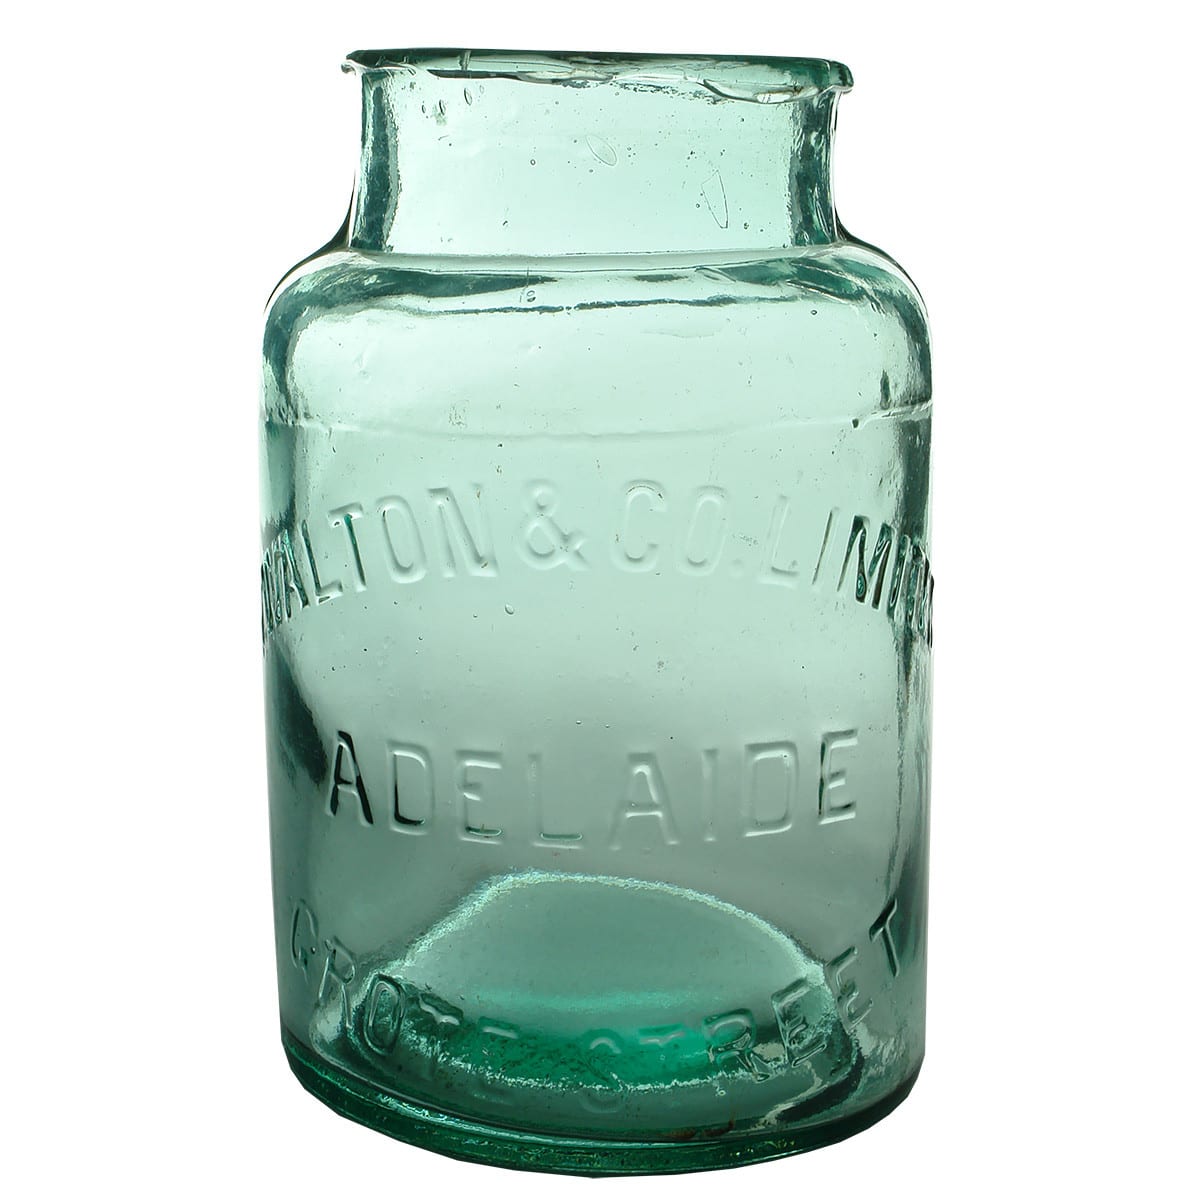 Lolly Jar. Walton & Co Limited., Grote Street, Adelaide. Aqua. Half Gallon. (South Australia)